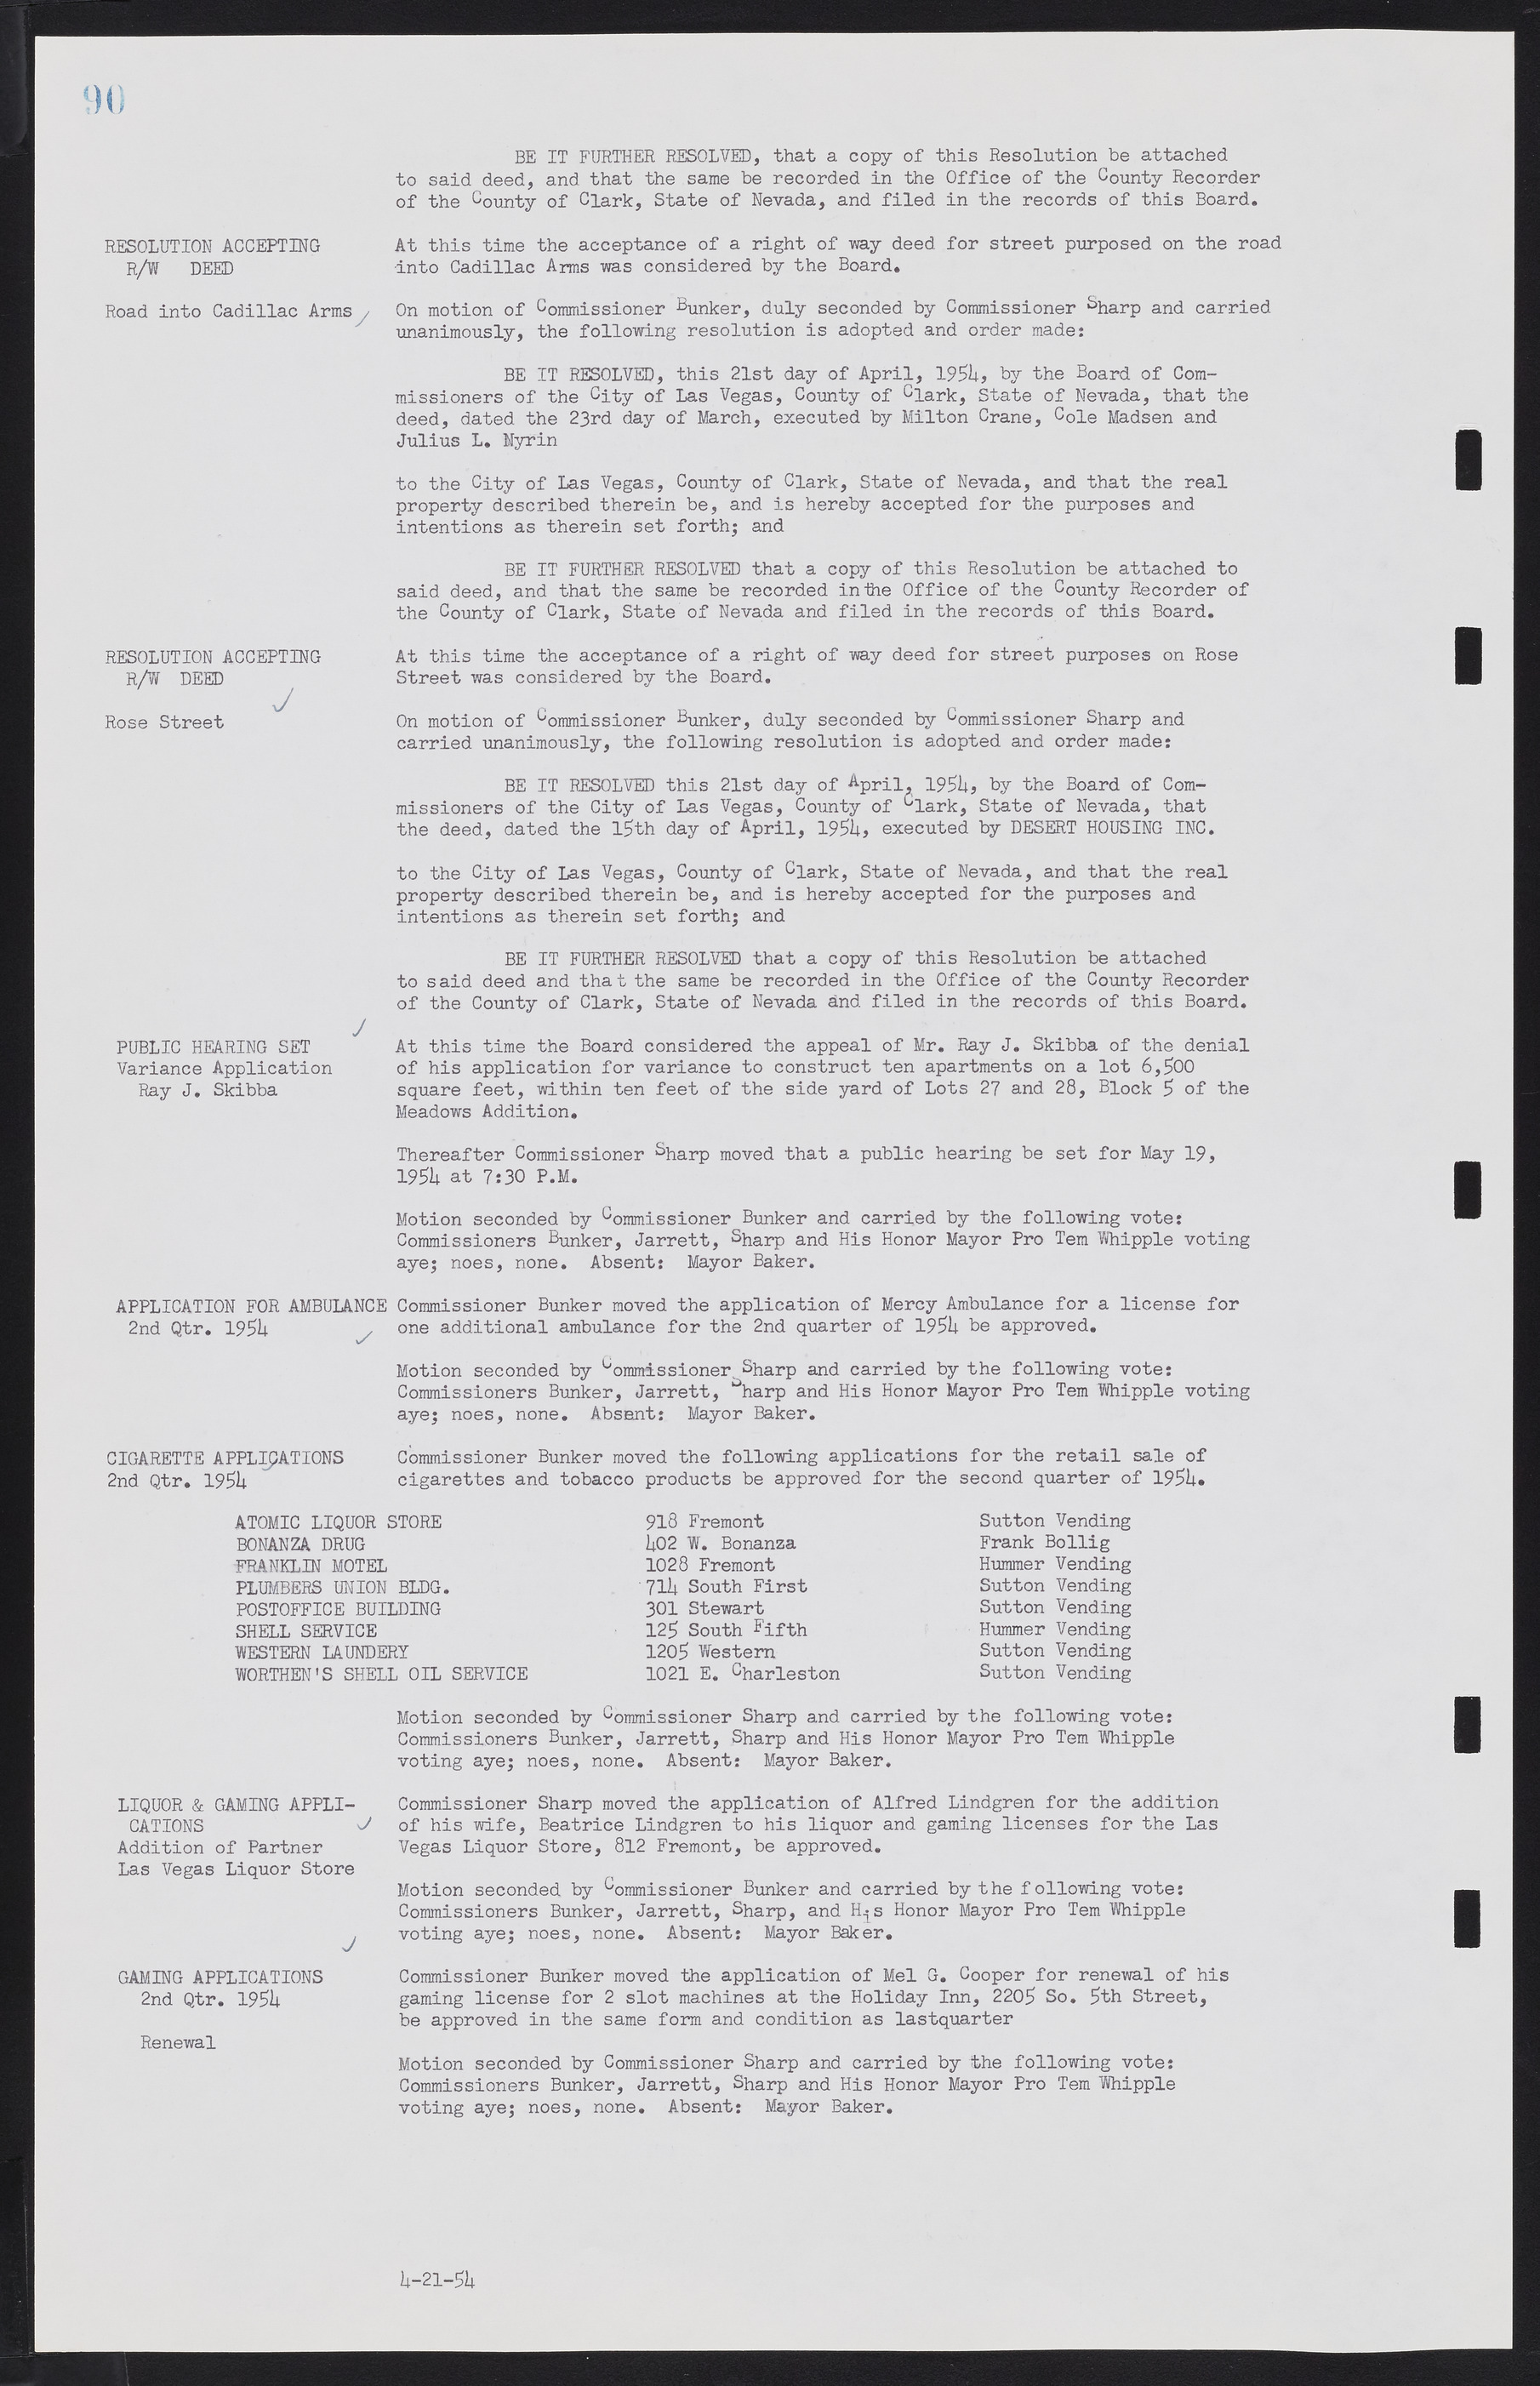 Las Vegas City Commission Minutes, February 17, 1954 to September 21, 1955, lvc000009-94